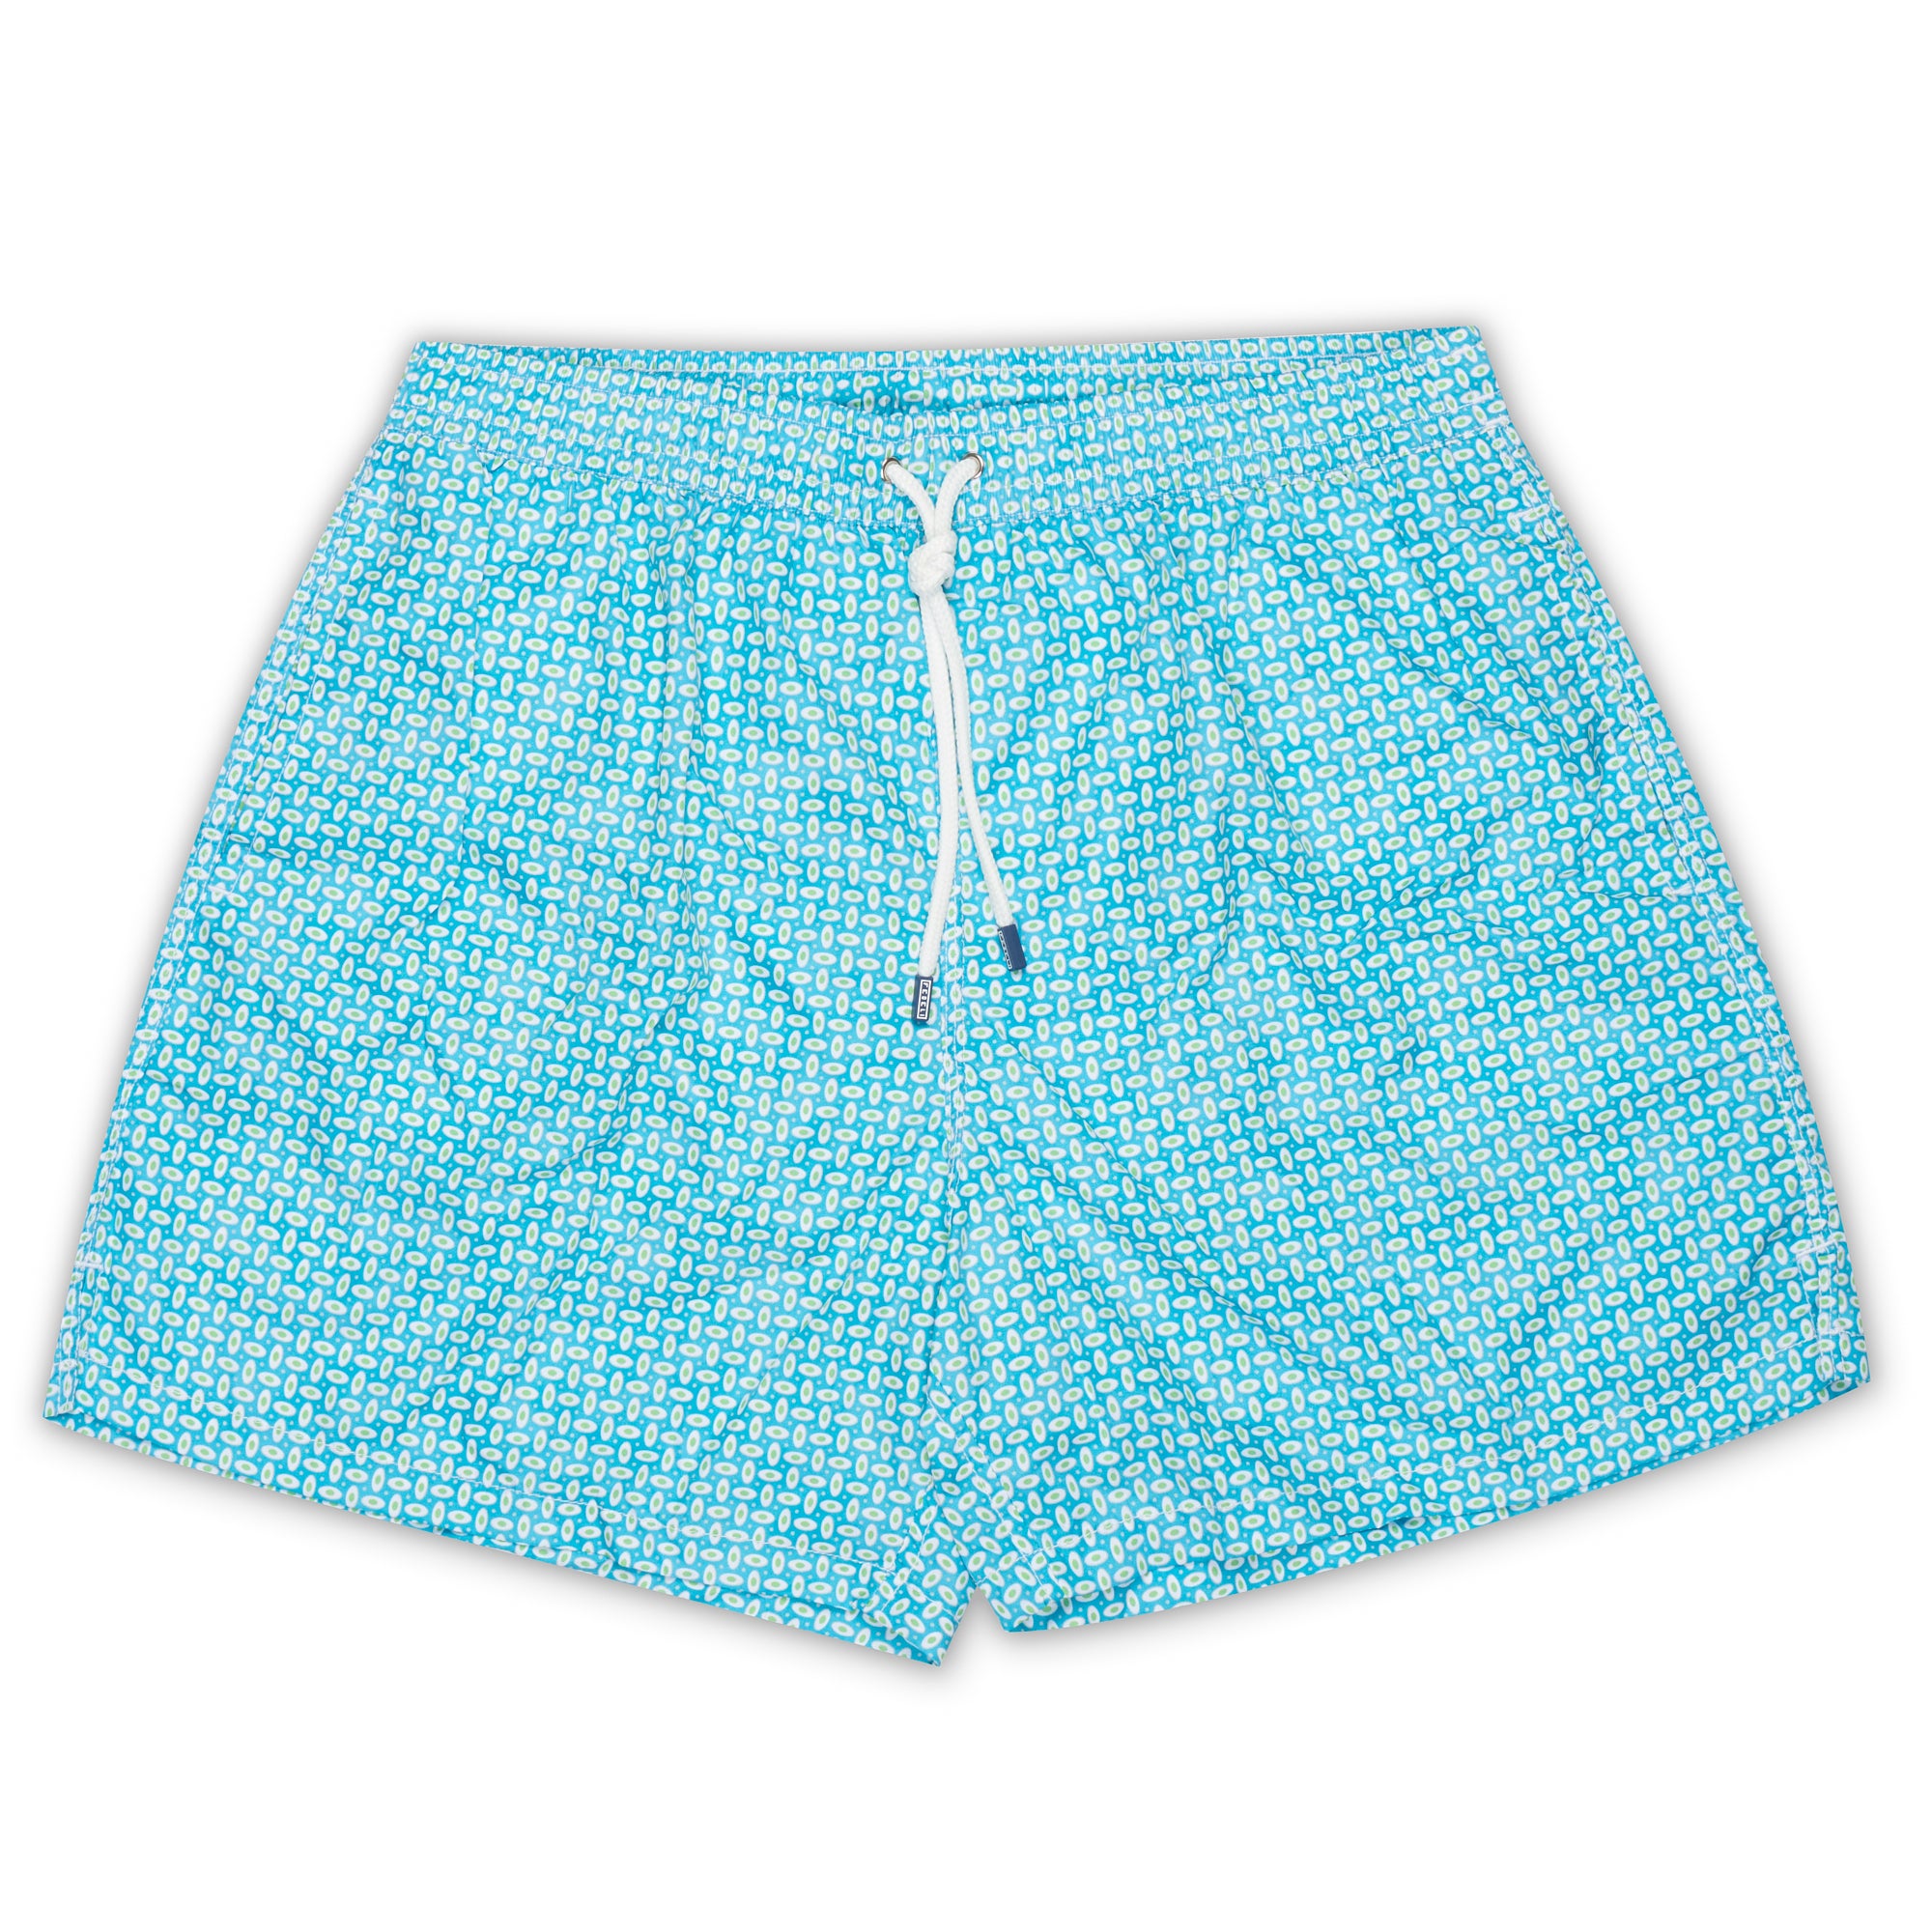 FEDELI Blue Geometric Printed Madeira Airstop Swim Shorts Trunks NEW 2XL FEDELI